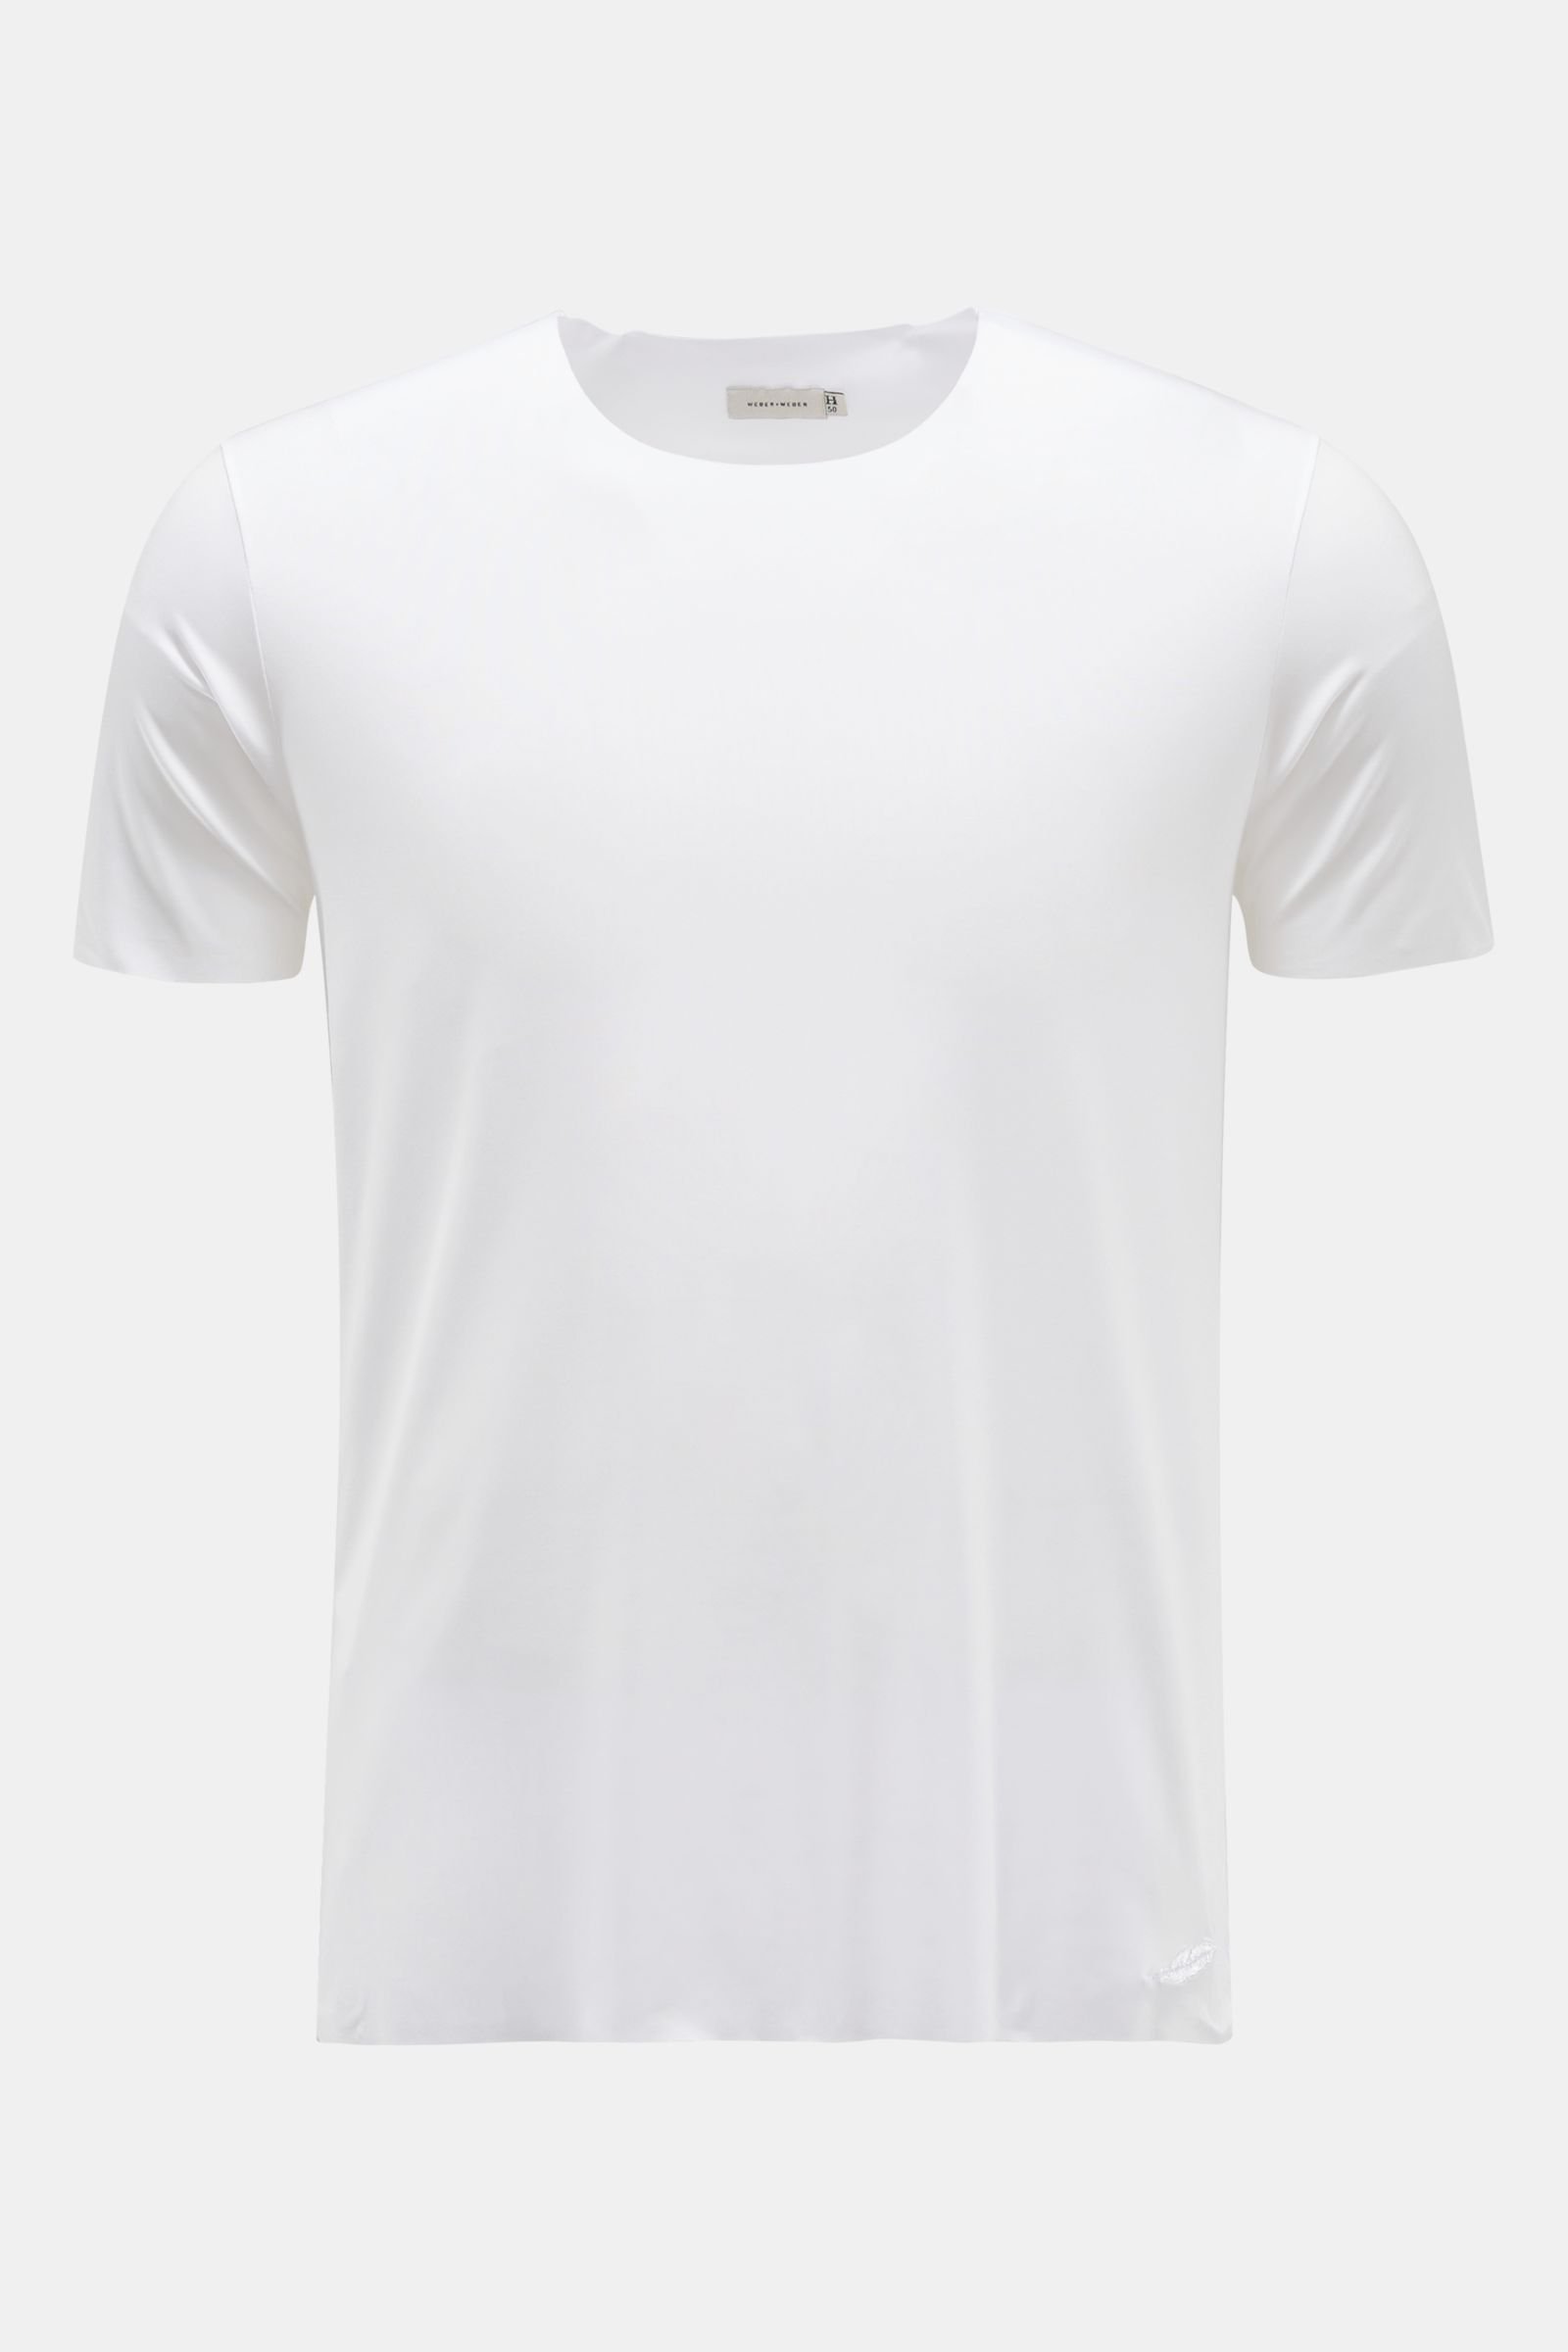 Crew neck T-shirt 'Travel Crew Neck' white